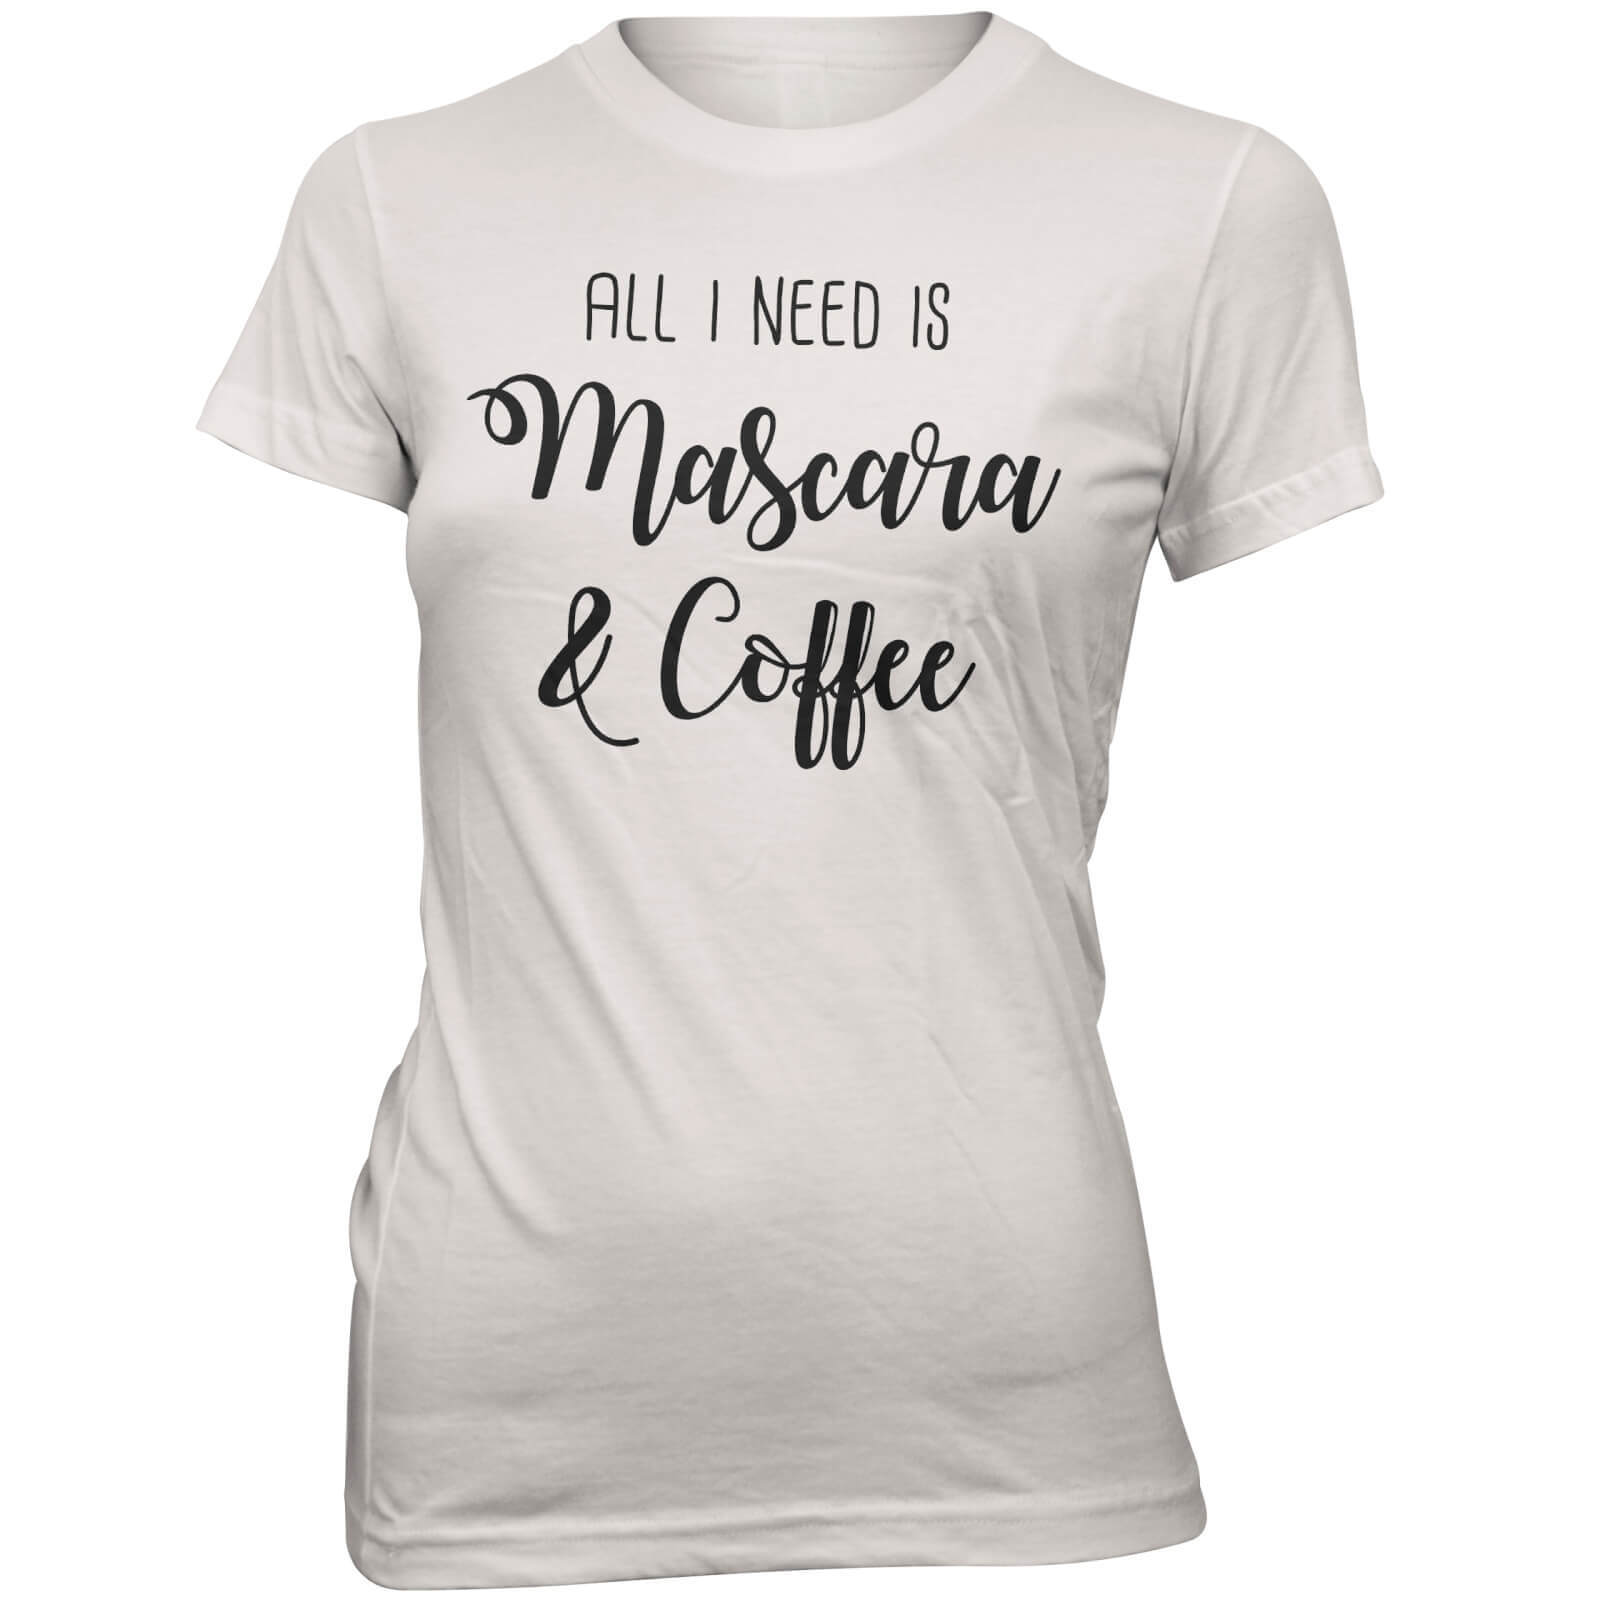 Mascara and Coffee Women's Slogan T-Shirt - S - White